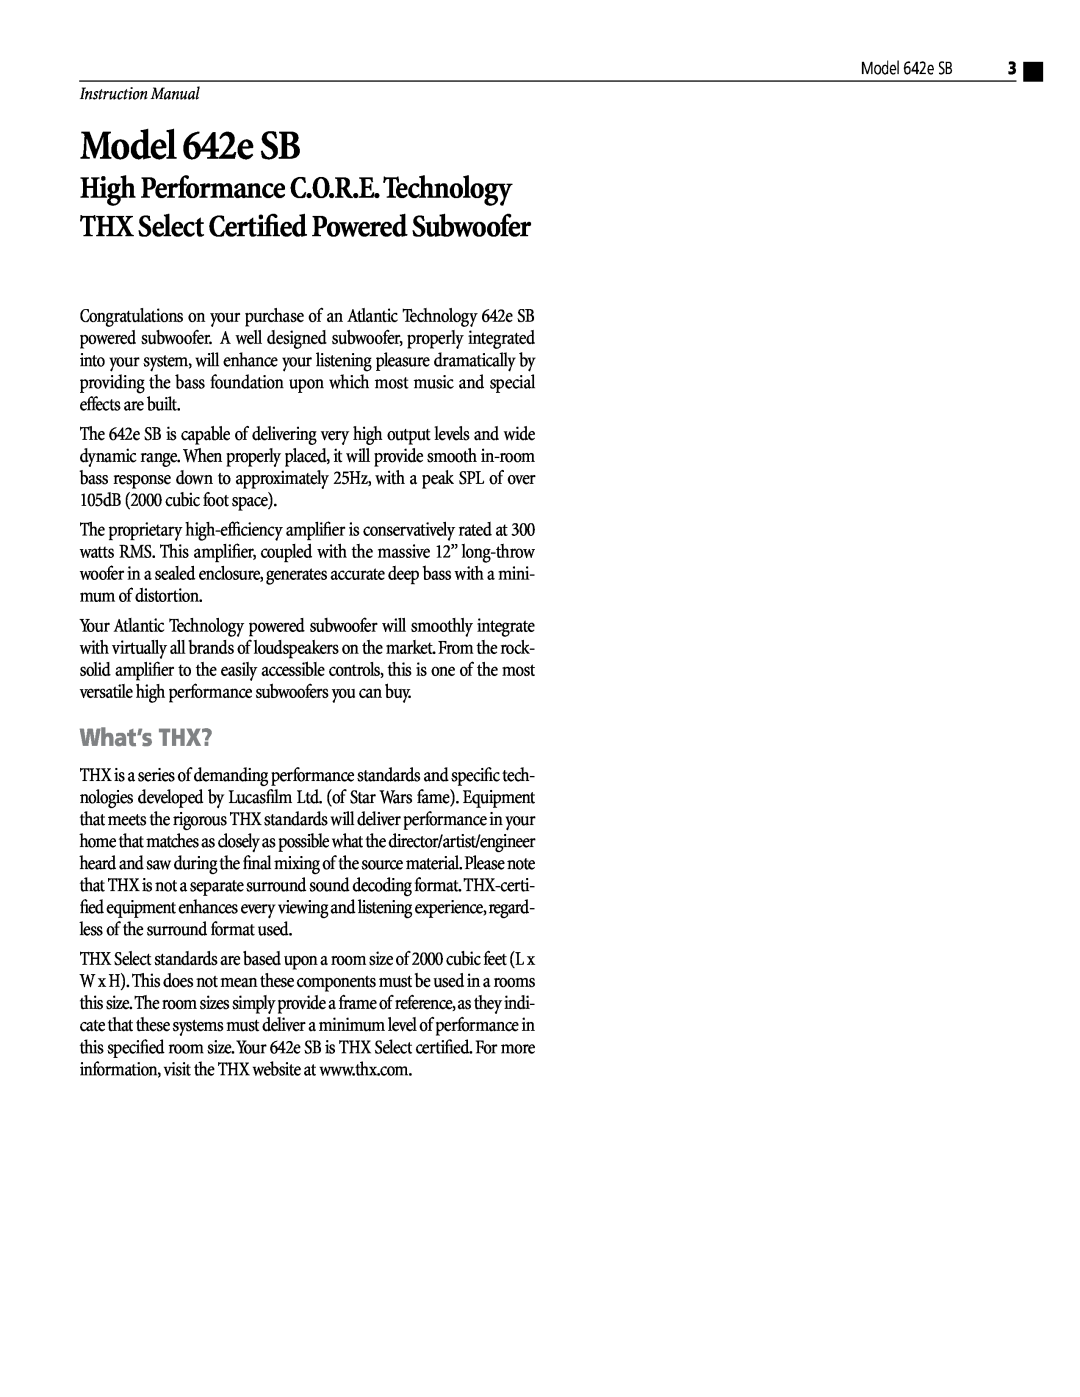 Atlantic Technology instruction manual What’s THX?, Model 642e SB, High Performance C.O.R.E.Technology 